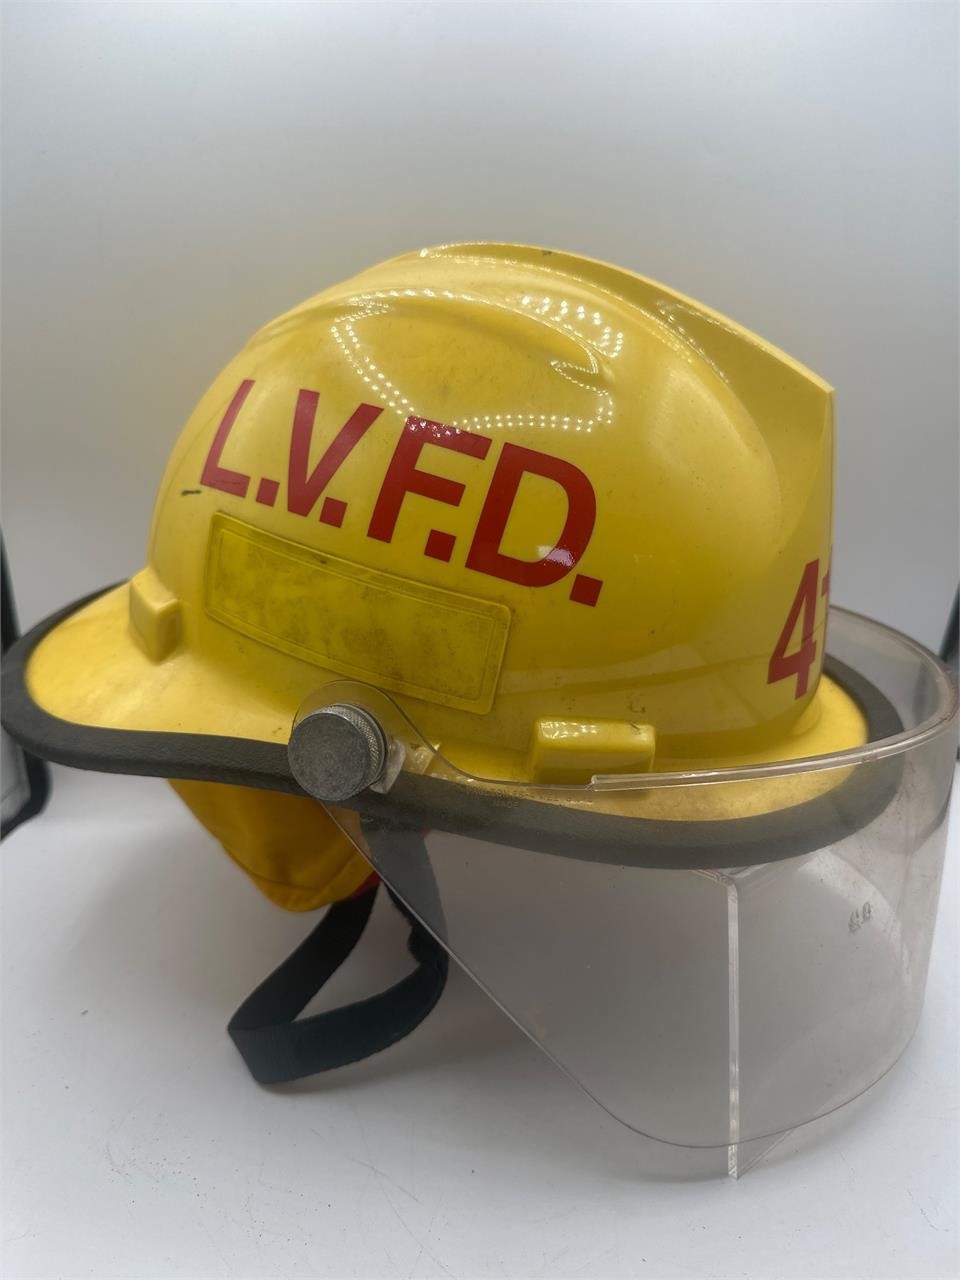 Las Vegas fire department helmet